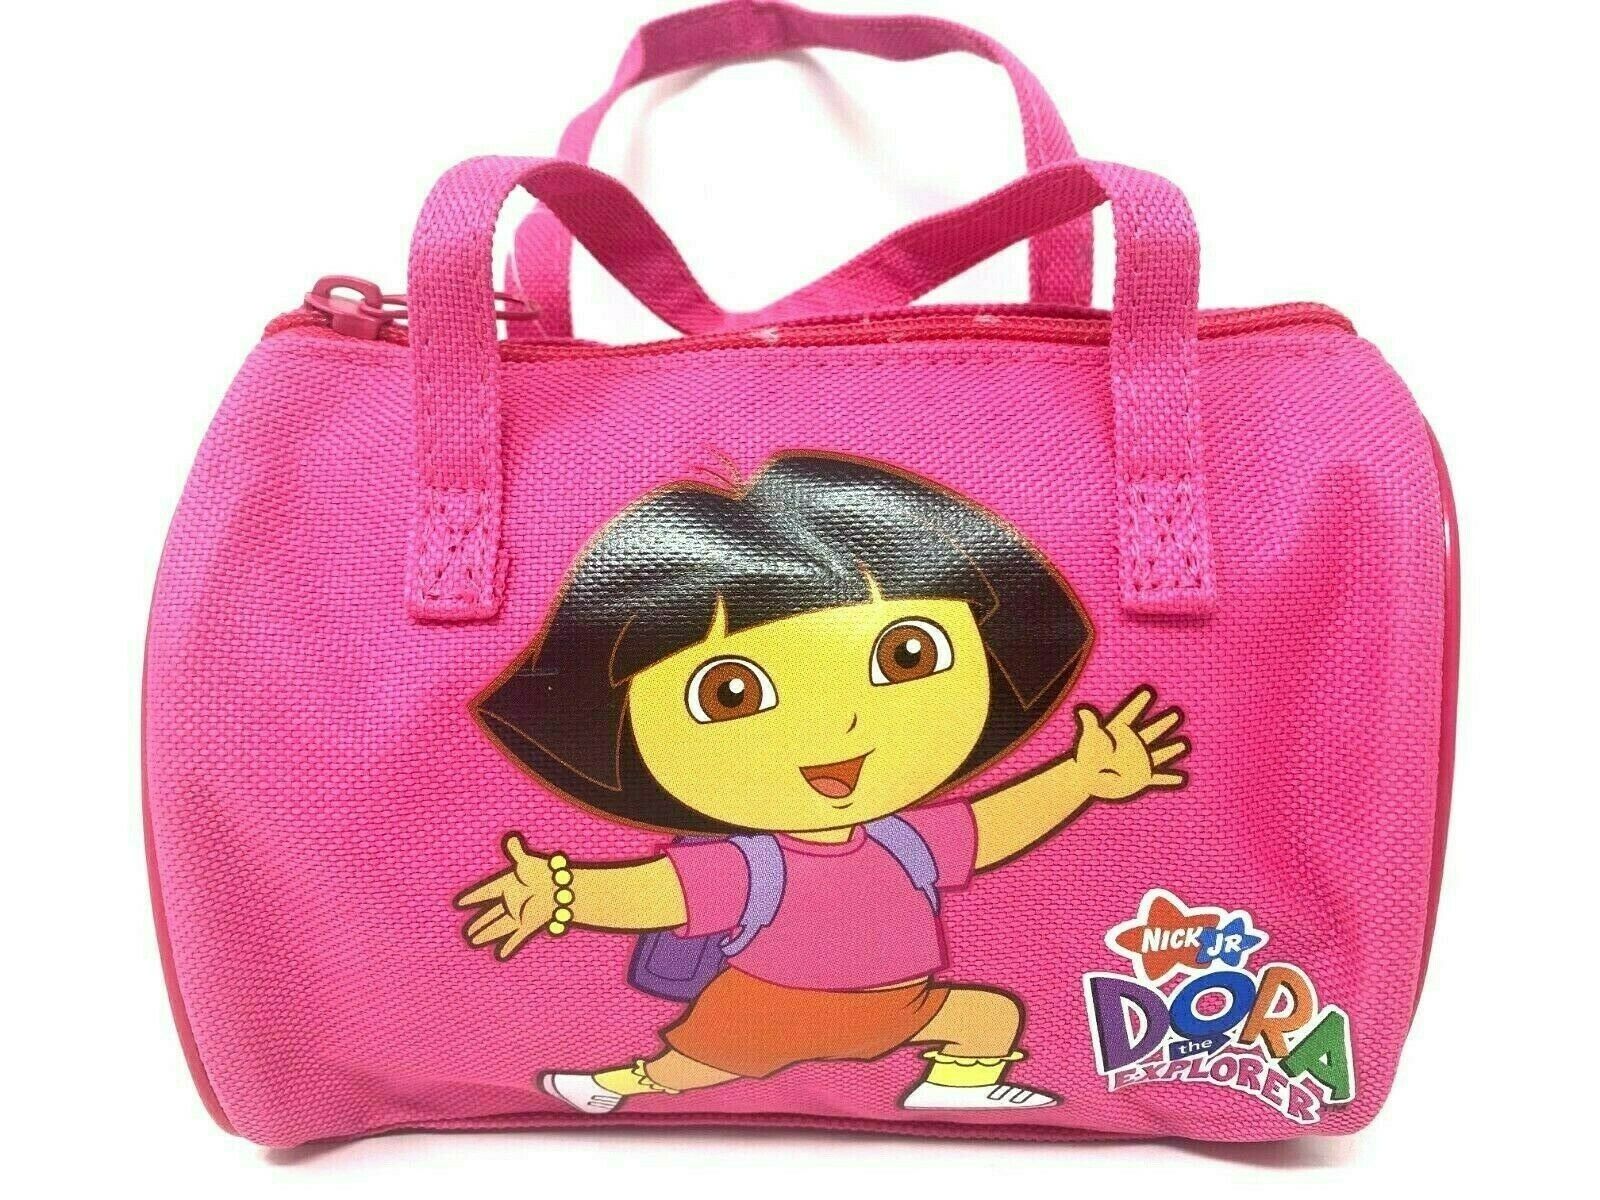 Nickelodeon Dora The Explorer Mini 7" Handbag